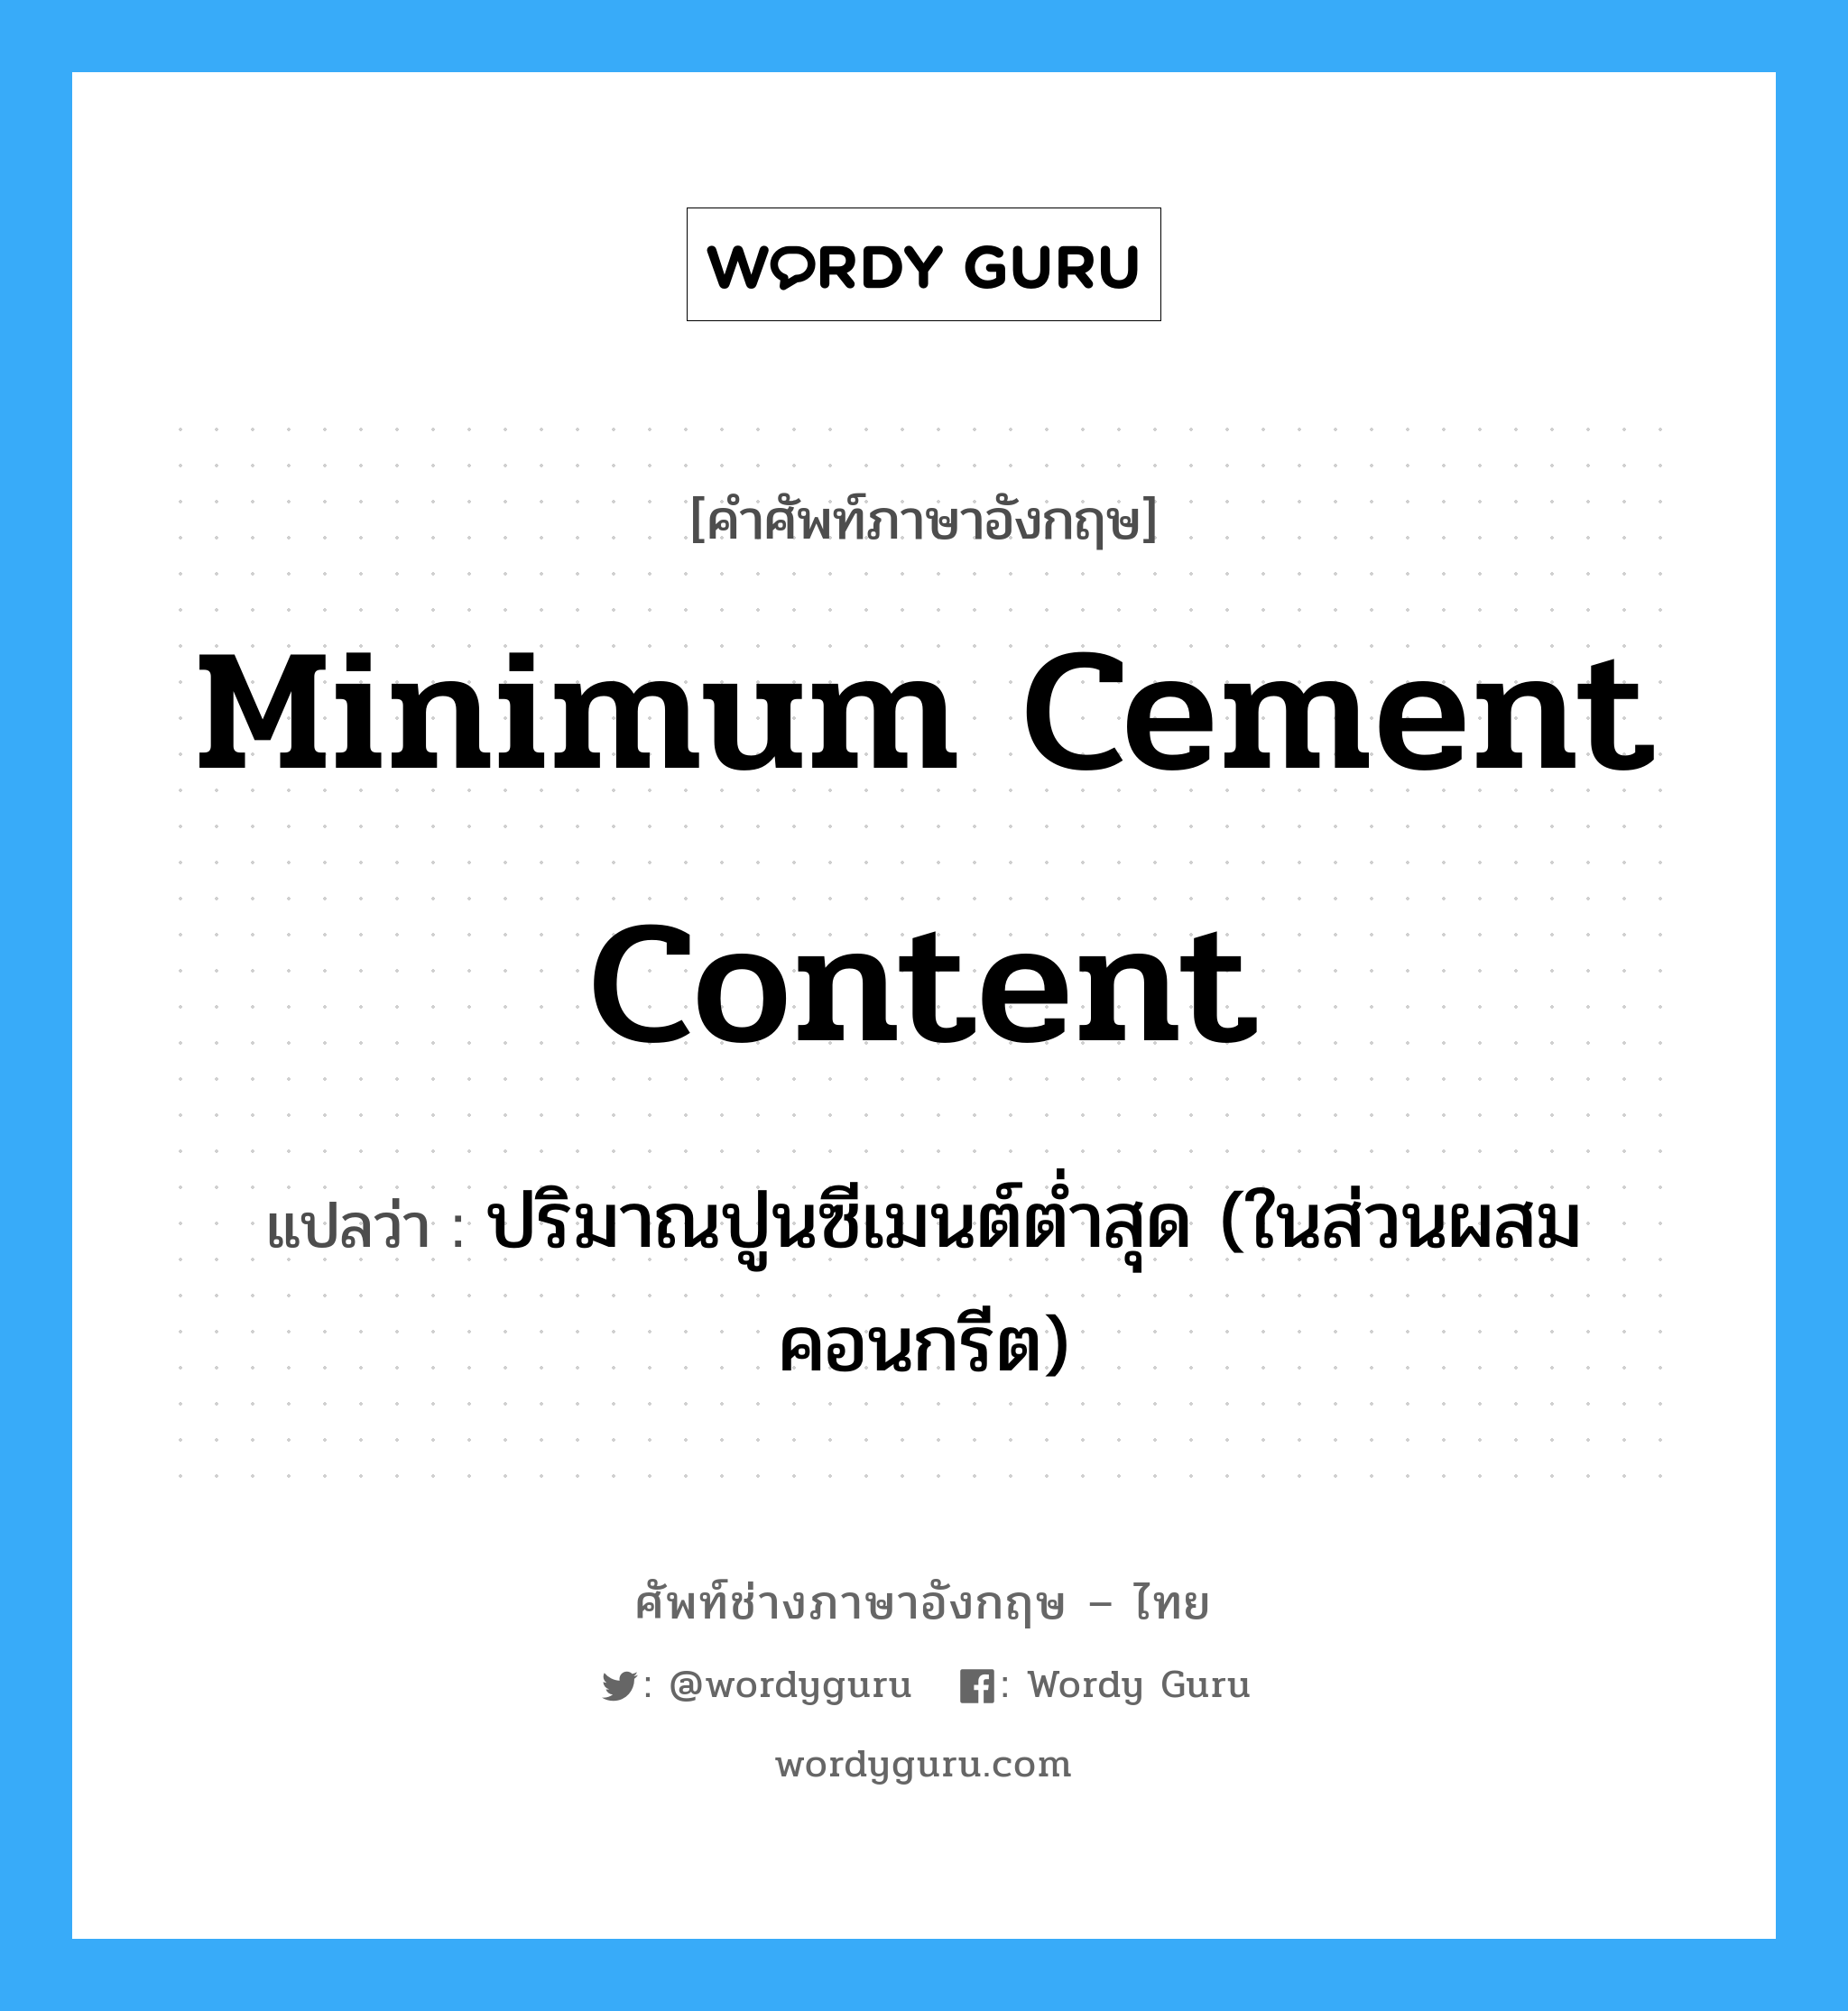 minimum cement content แปลว่า?, คำศัพท์ช่างภาษาอังกฤษ - ไทย minimum cement content คำศัพท์ภาษาอังกฤษ minimum cement content แปลว่า ปริมาณปูนซีเมนต์ต่ำสุด (ในส่วนผสมคอนกรีต)